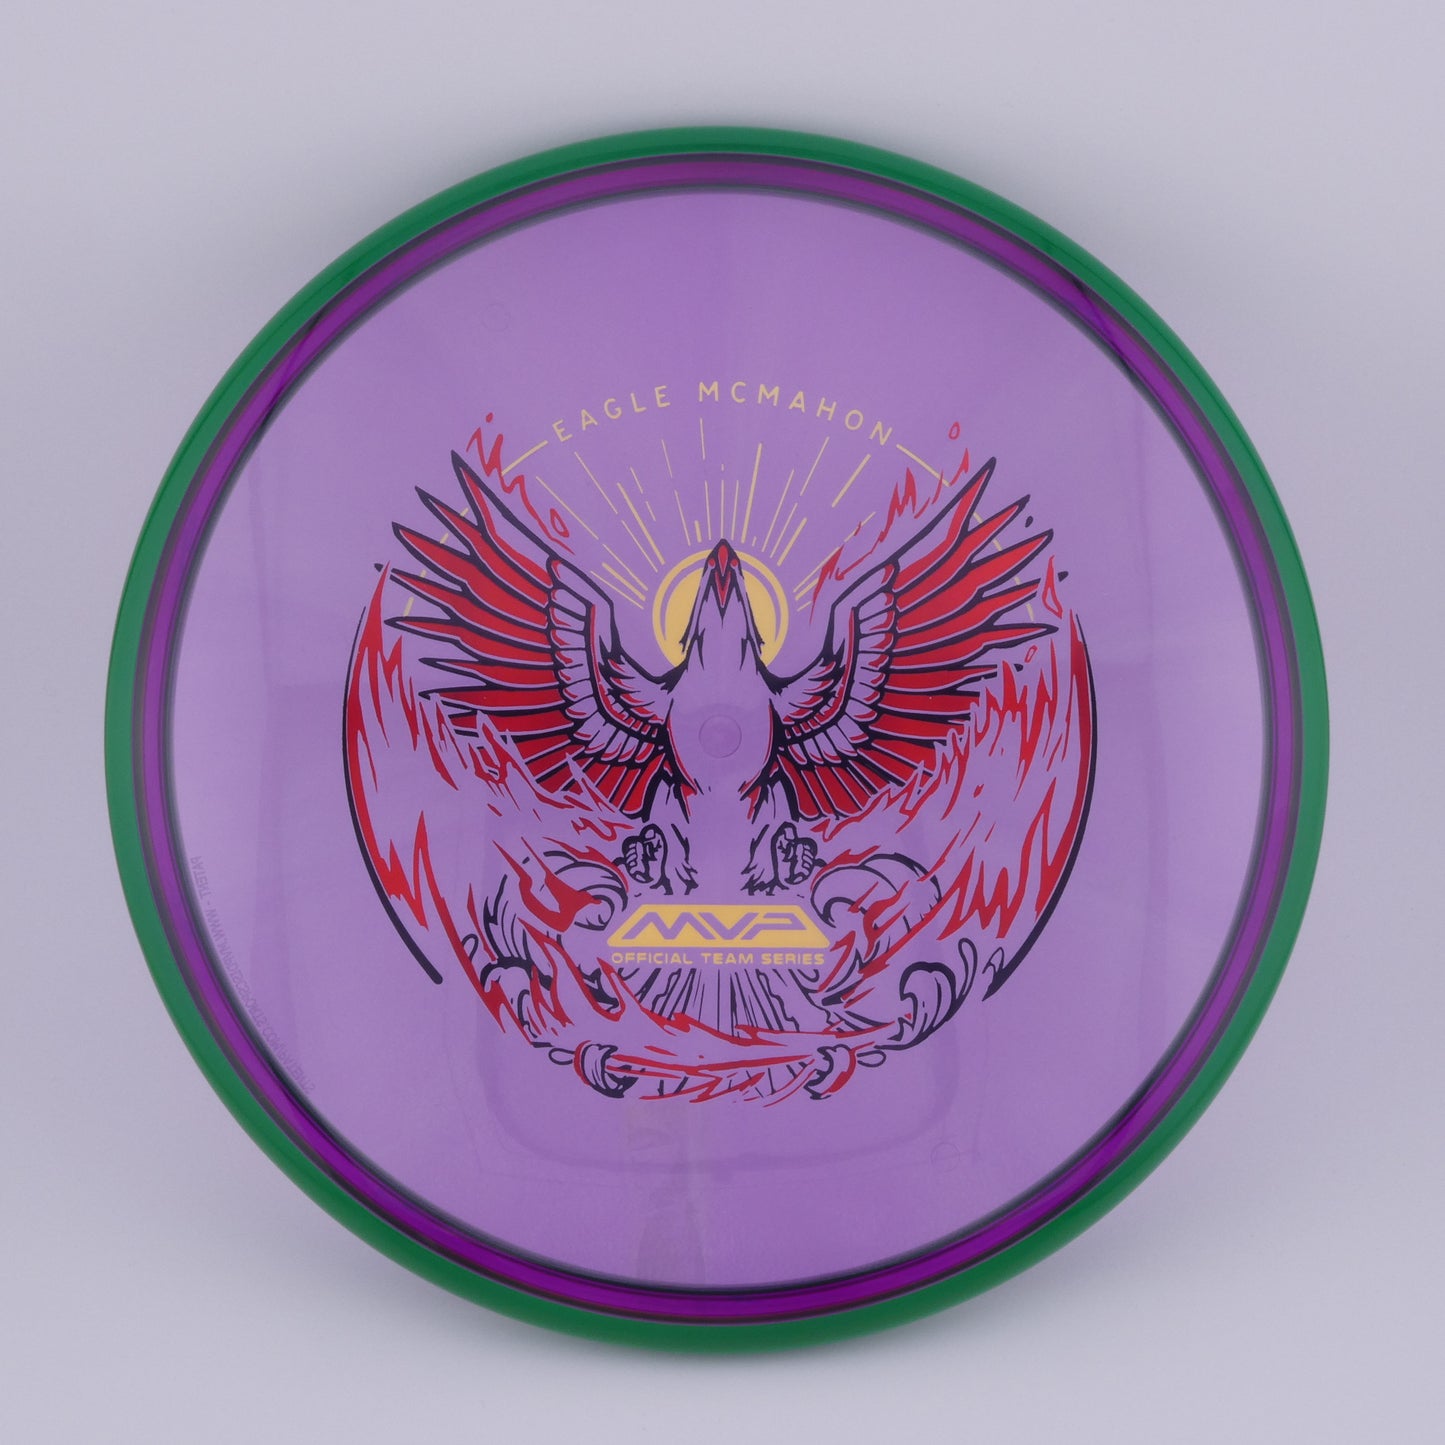 Prism Proton Envy - Rebirth - Eagle McMahon Team Series